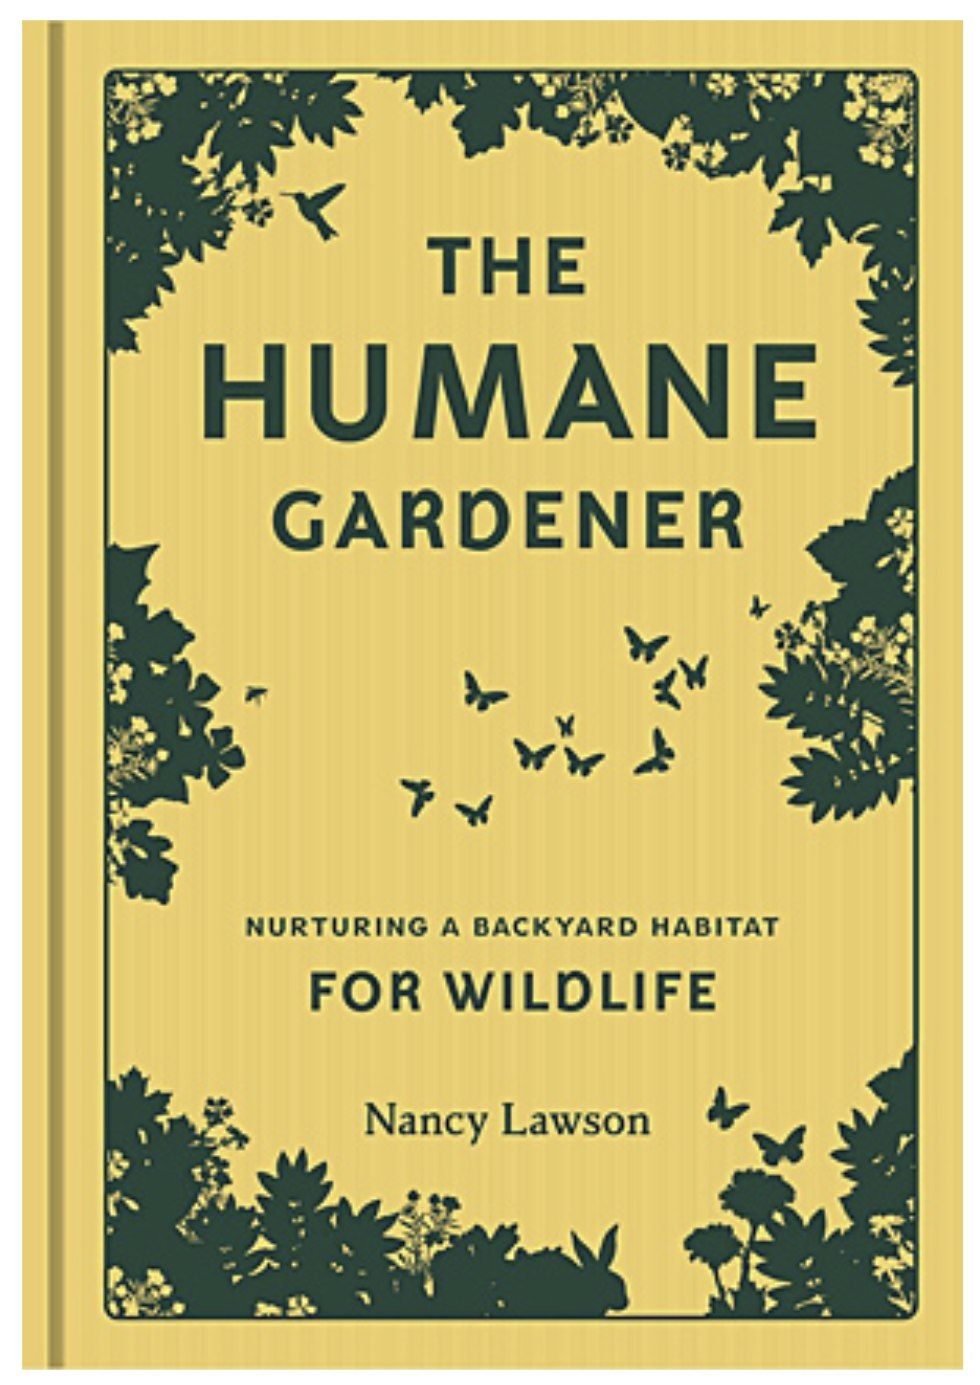 Native Plant Book Club: The Humane Gardener